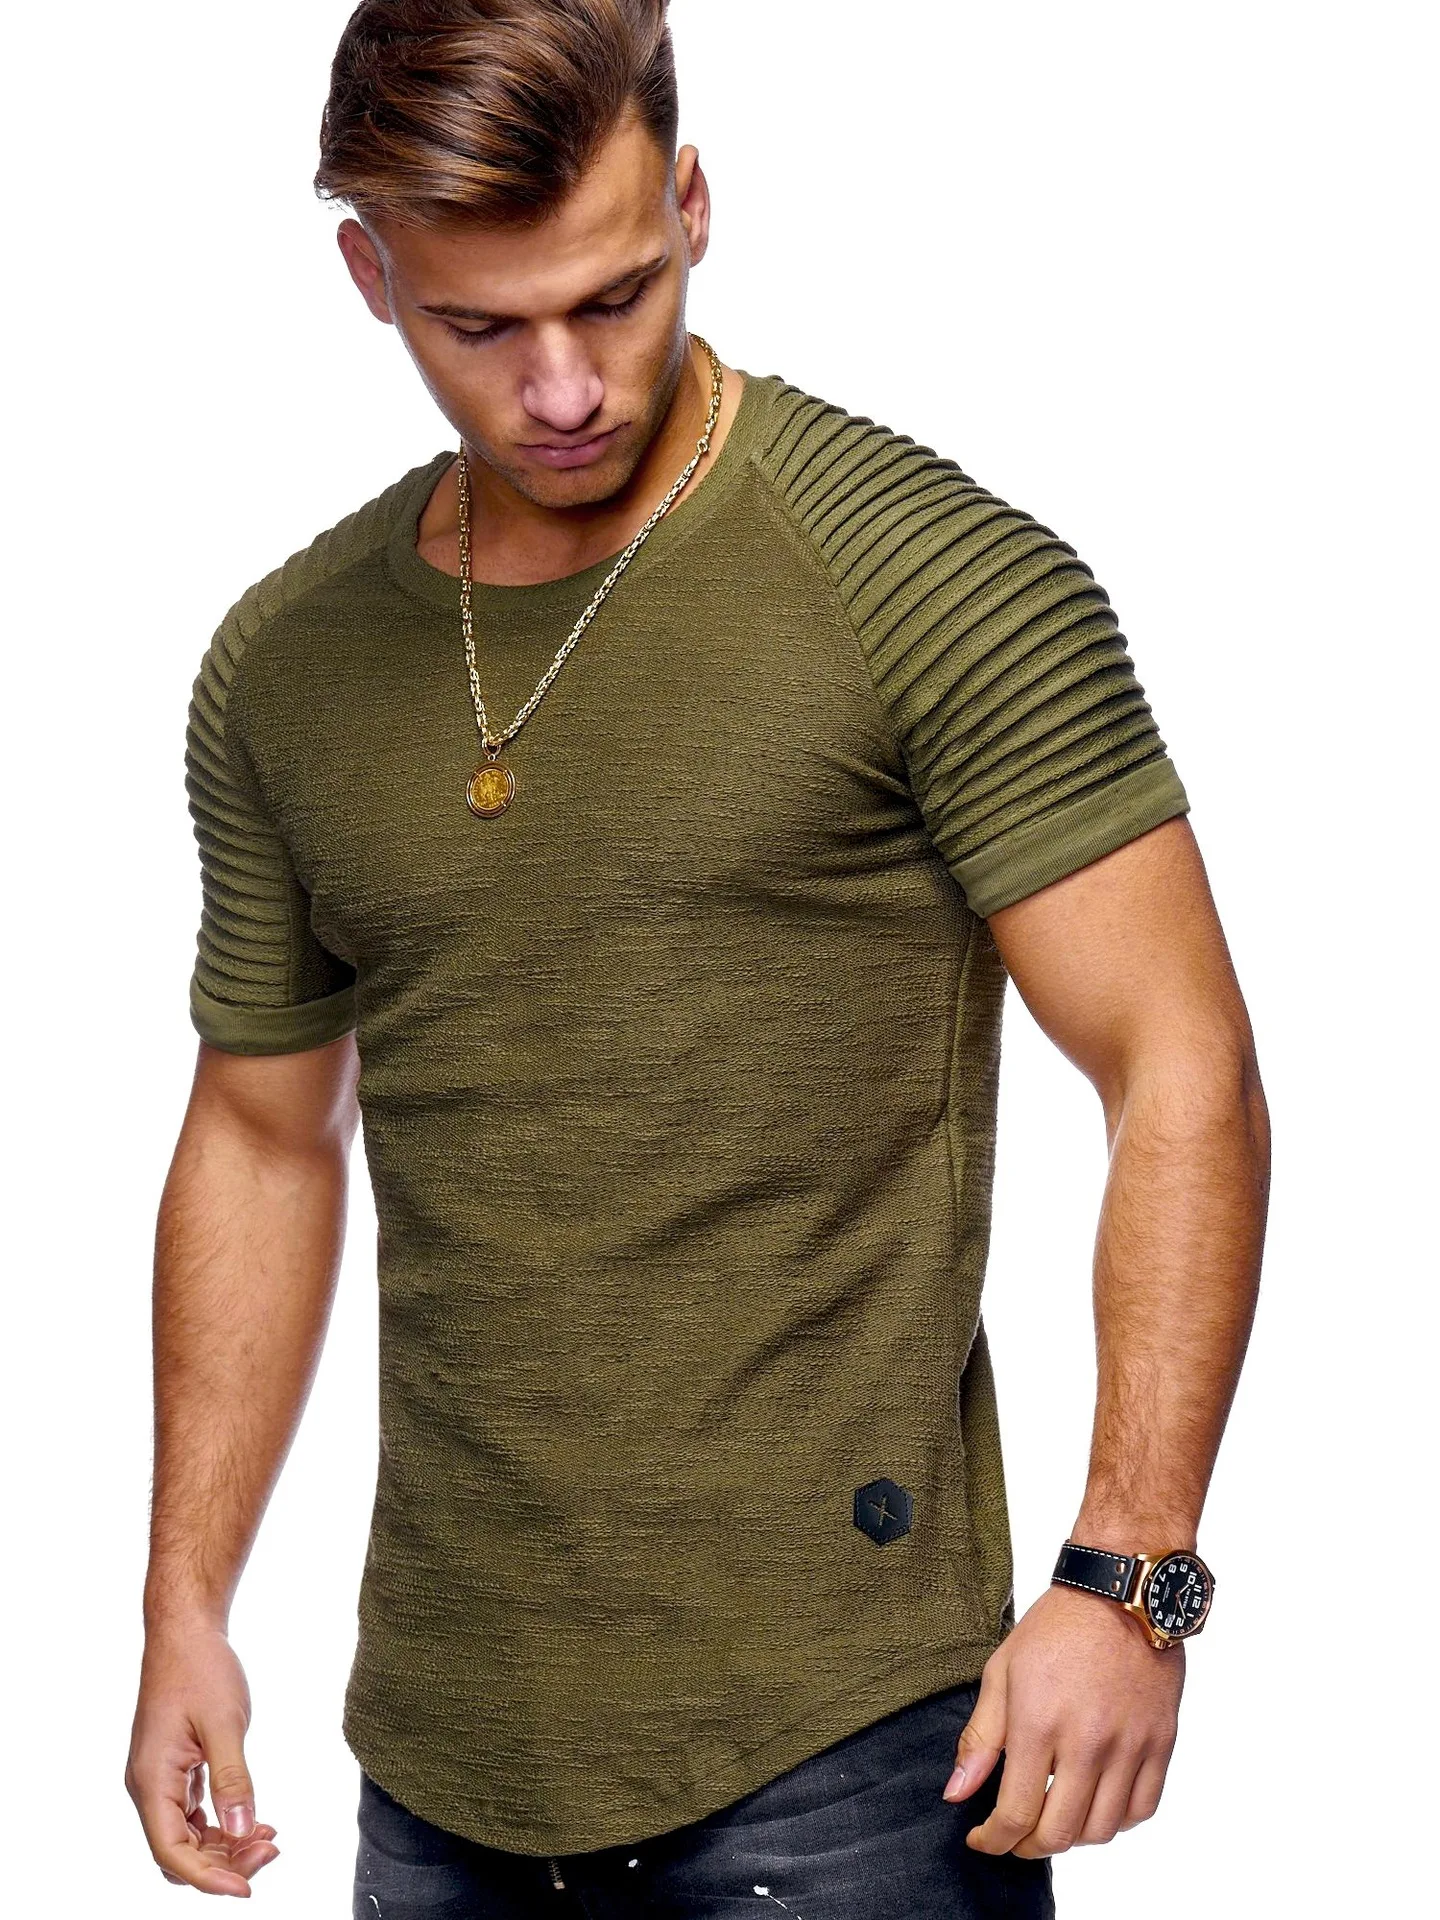 

B1327-Short-sleeved t-shirt men's 2019 summer new white cotton round neck Slim print trend half sleeve